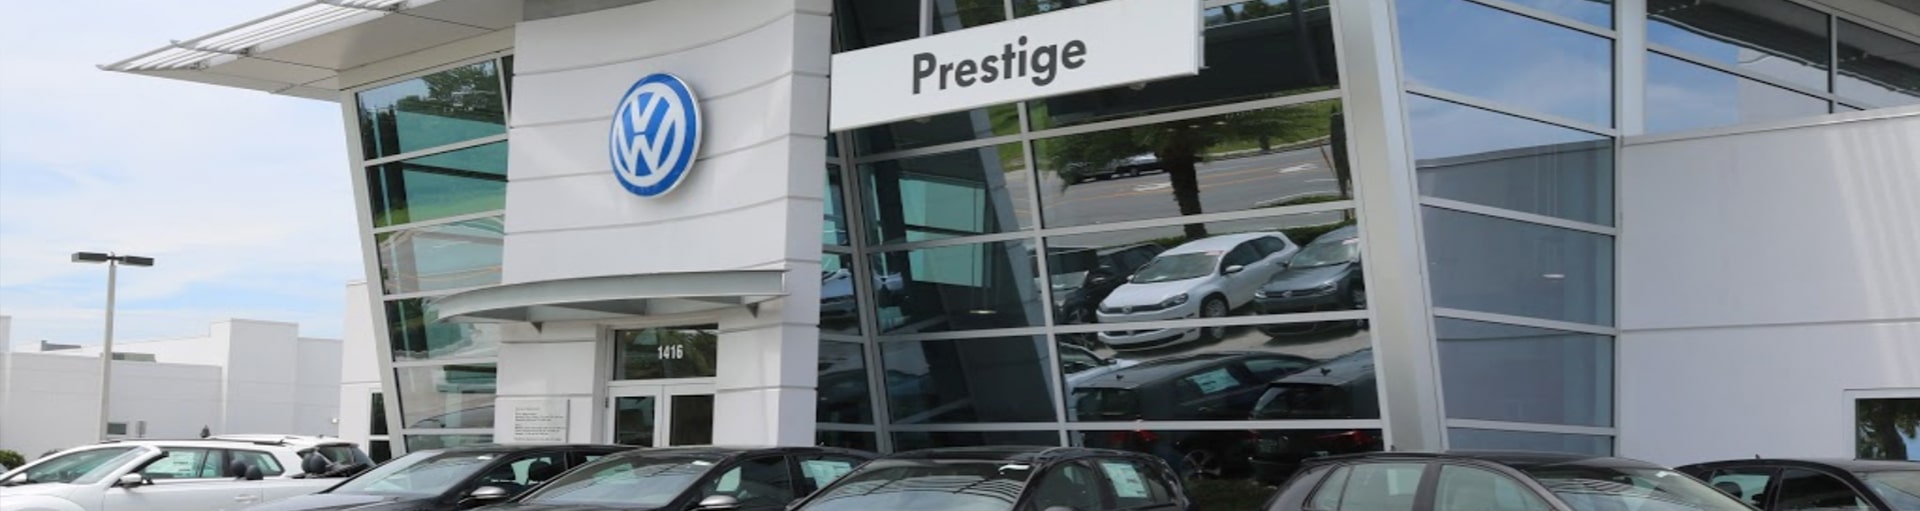 Prestige Volkswagen of Melbourne Fluids Services